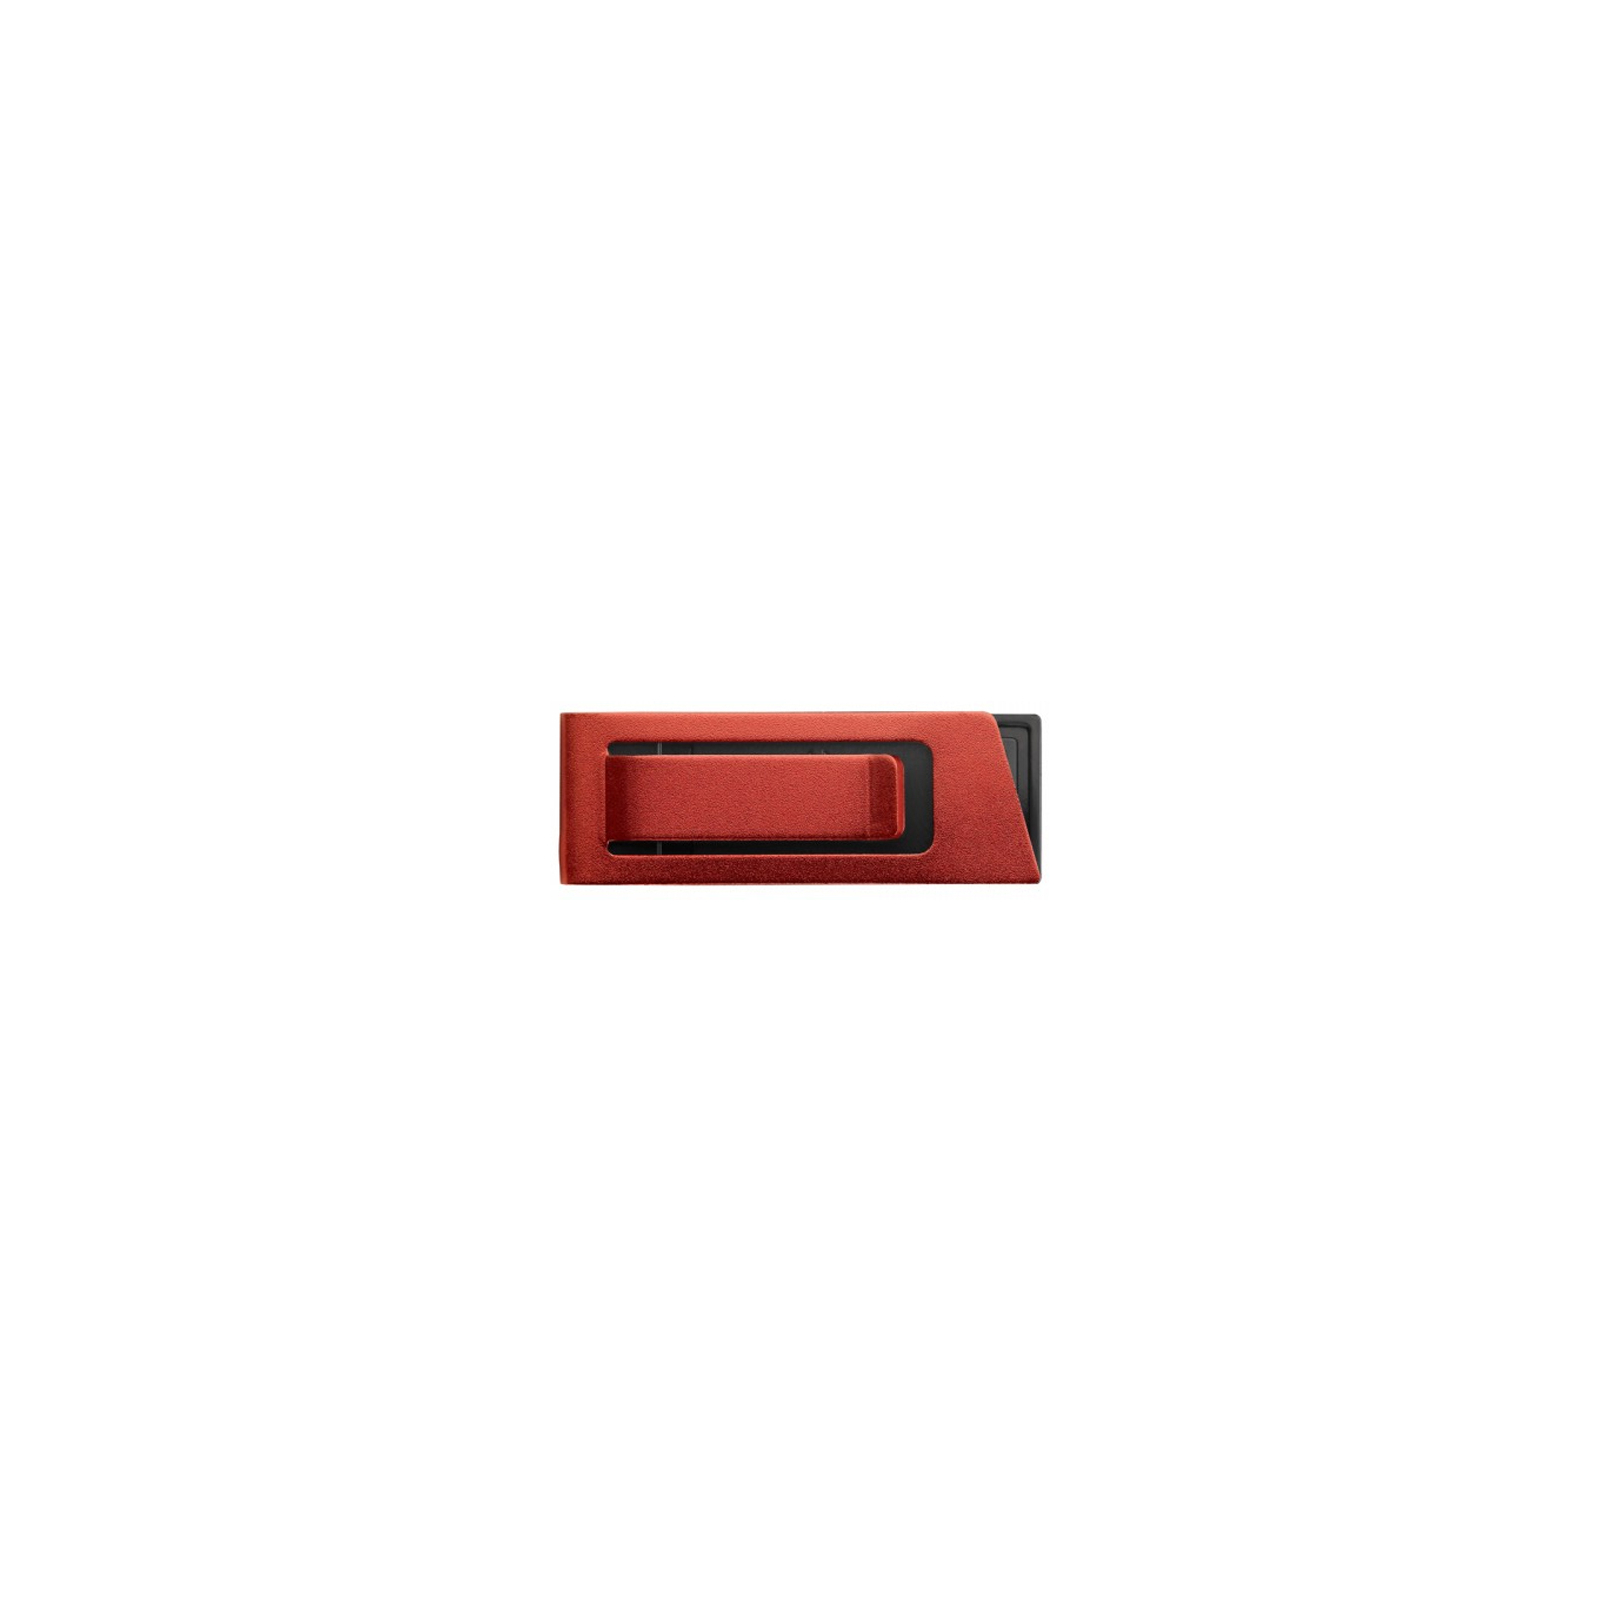 USB флеш накопитель Apacer 16GB AH130 Orange RP USB2.0 (AP16GAH130T-1) изображение 2